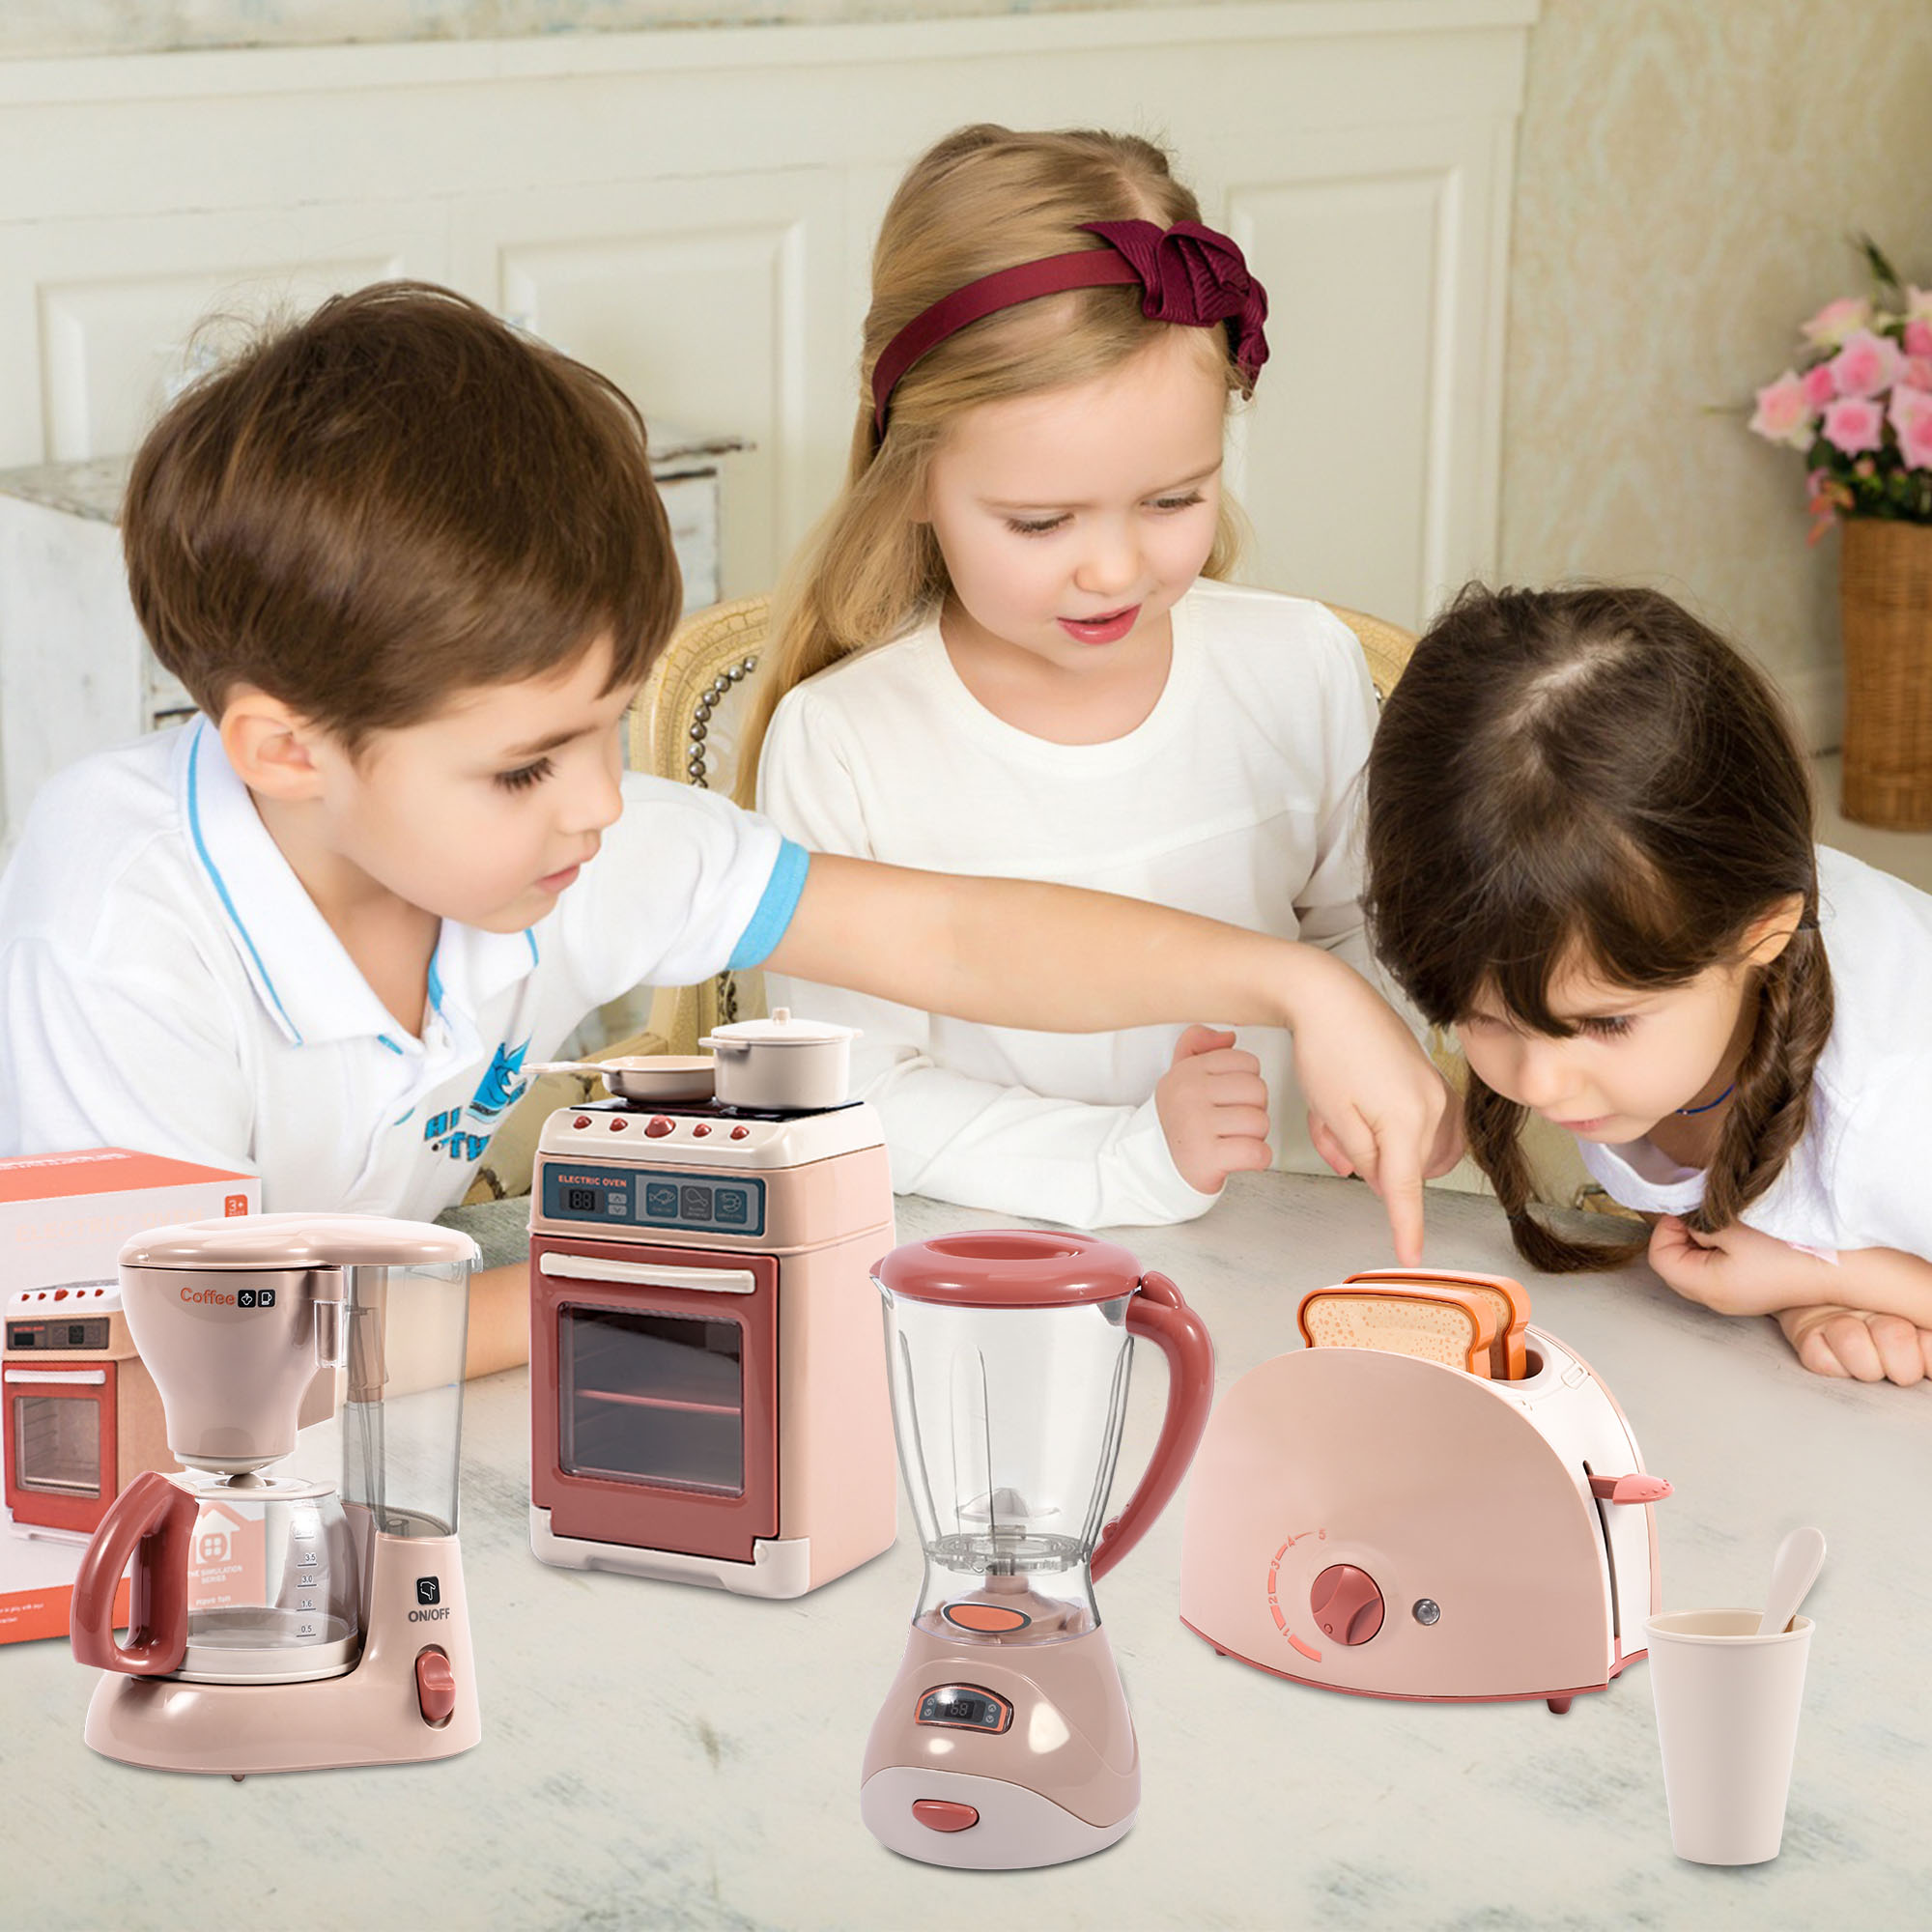 Wisairt Play Kitchen Set, 4Pcs Toy Kitchen Appliance w/Oven Toaster Coffee Maker Juicer, Khaki - image 3 of 11